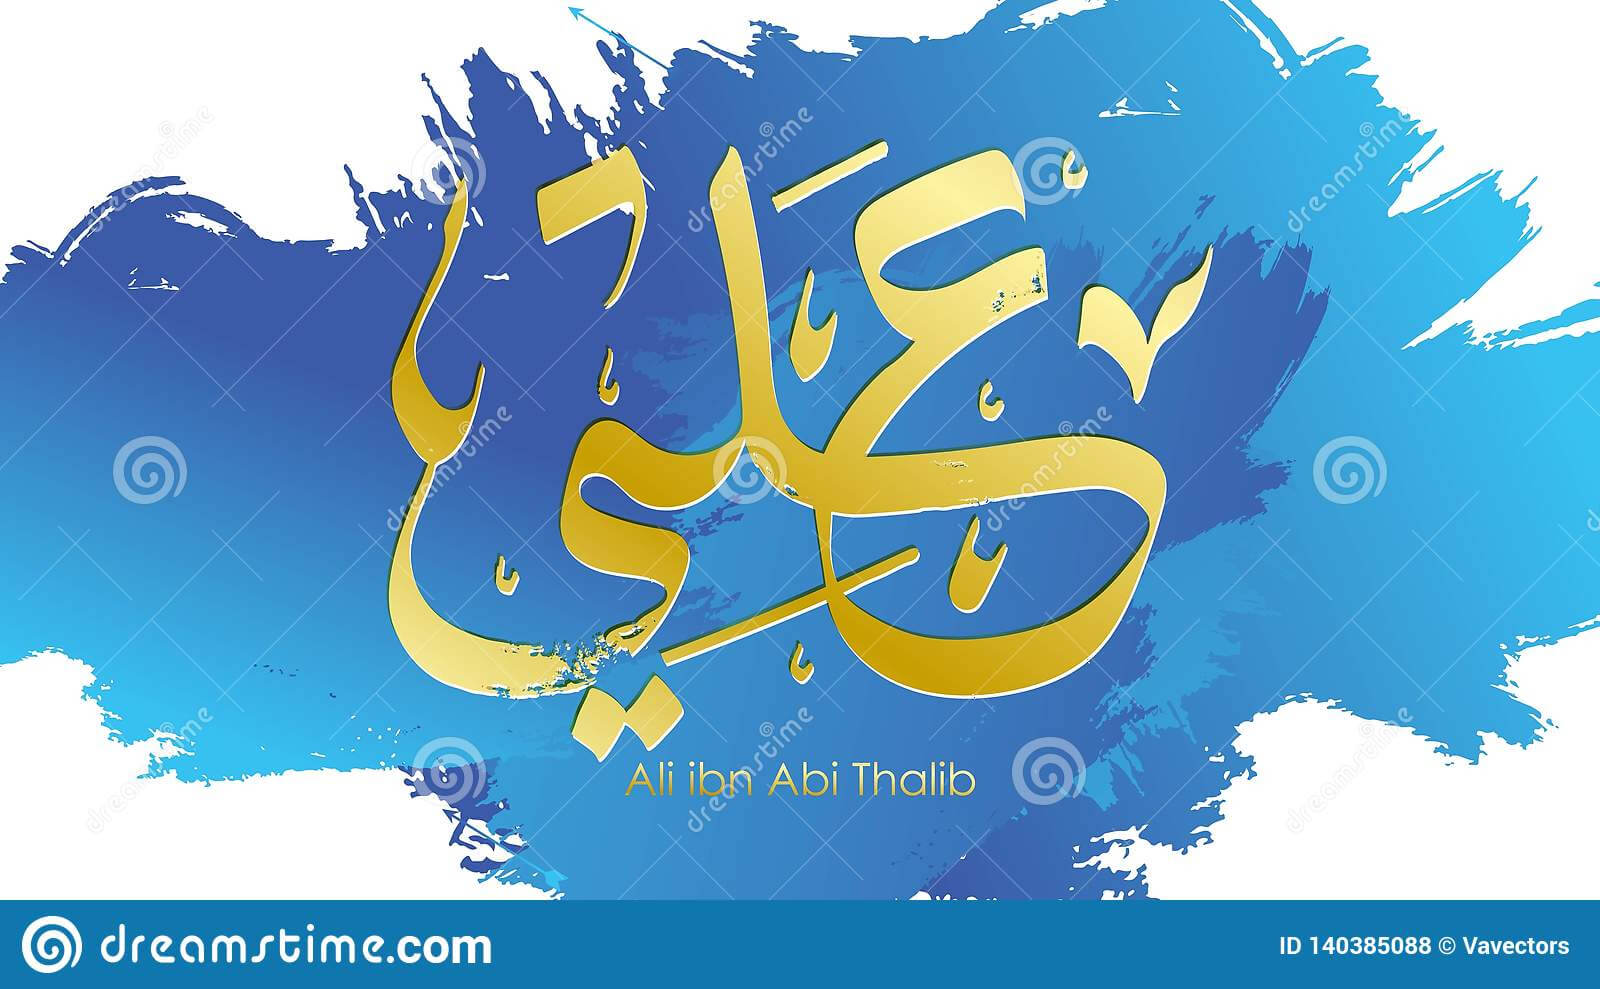 Arabic Hazrat Ali Bin Abi Thalib Greeting Card Template Intended For Bin Card Template